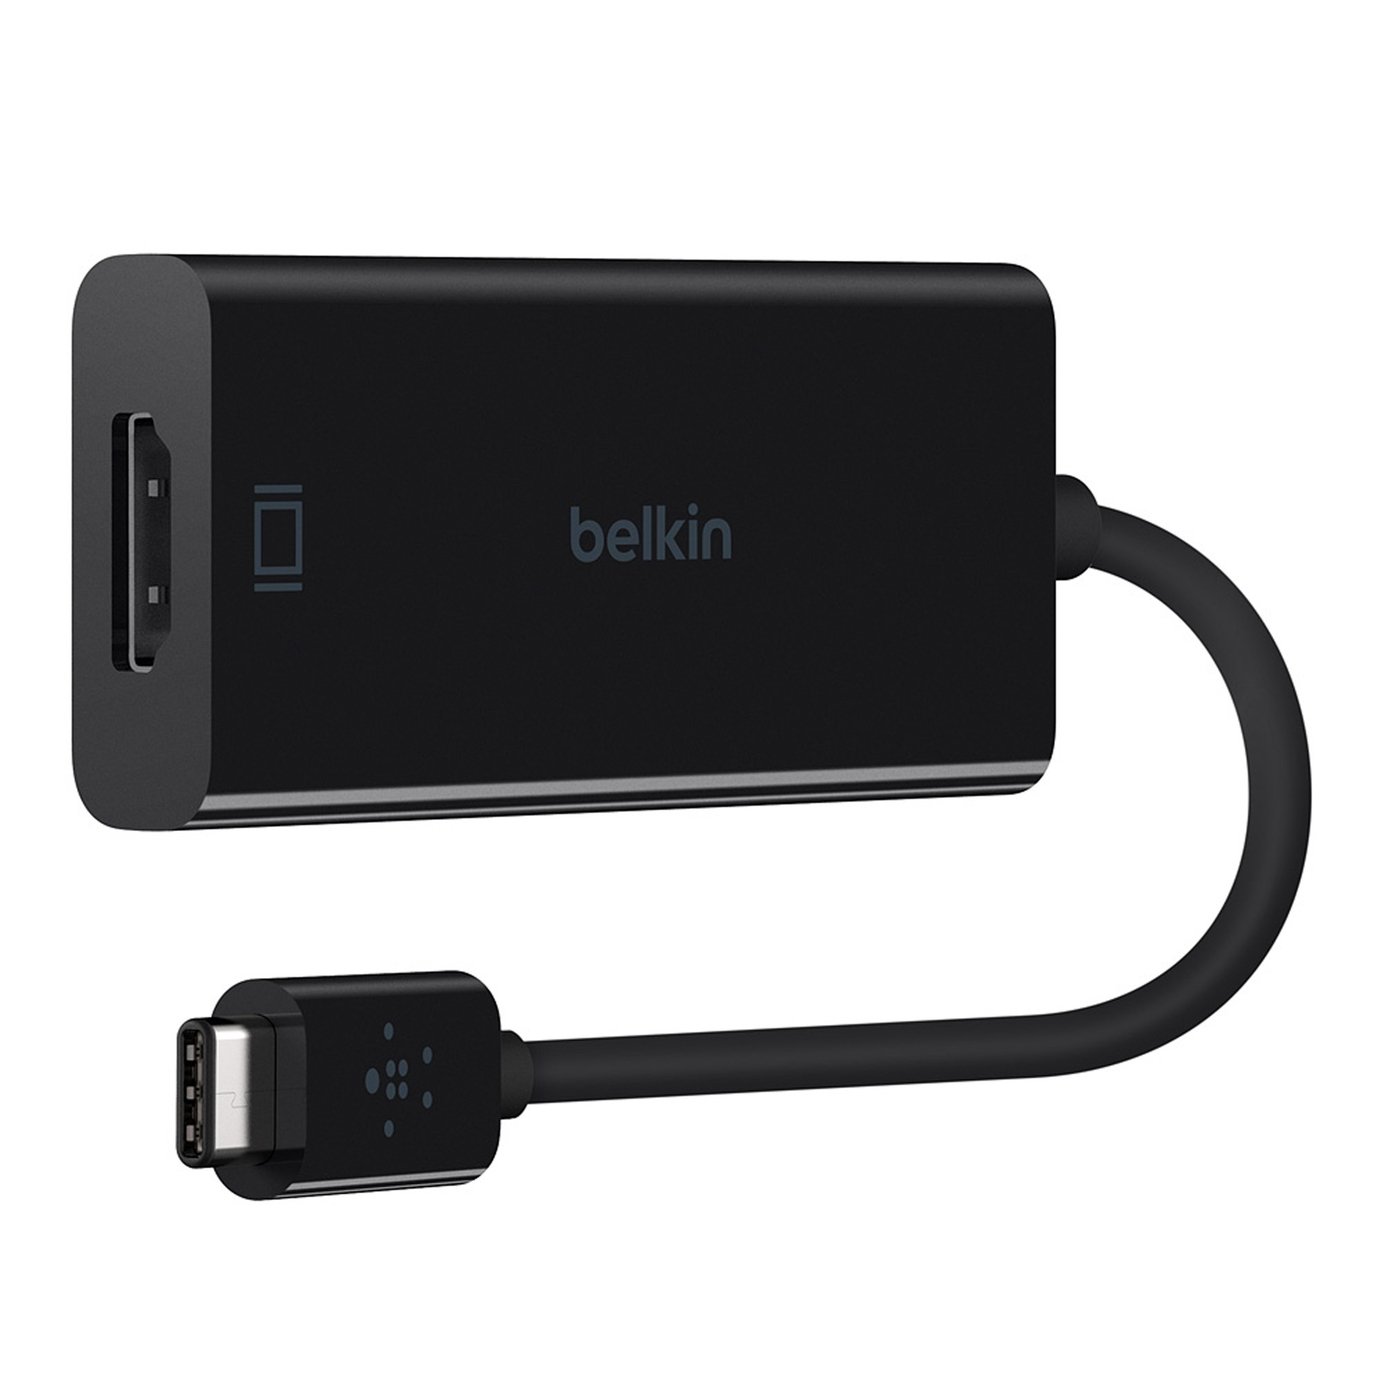 Belkin USB-C to HDMI Adapter - Black